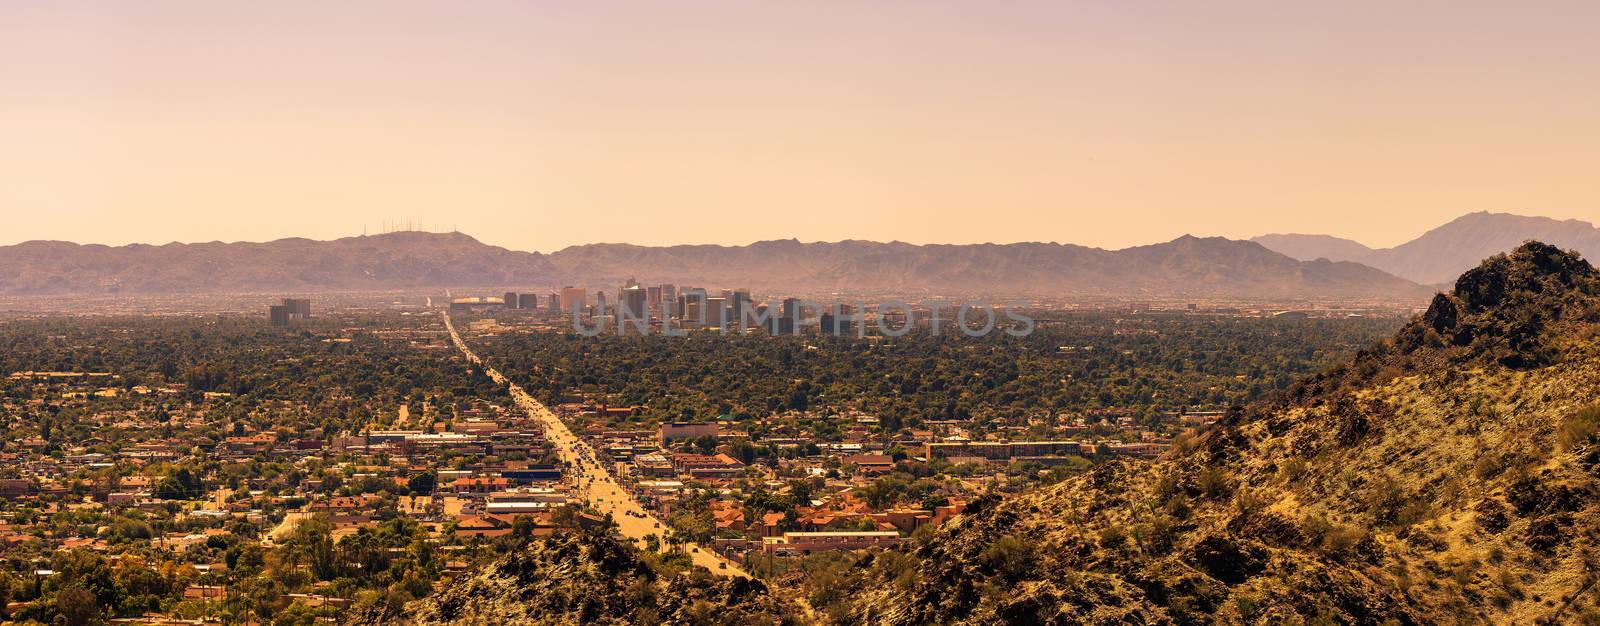 Panorama of Phoenix downtown by nickfox